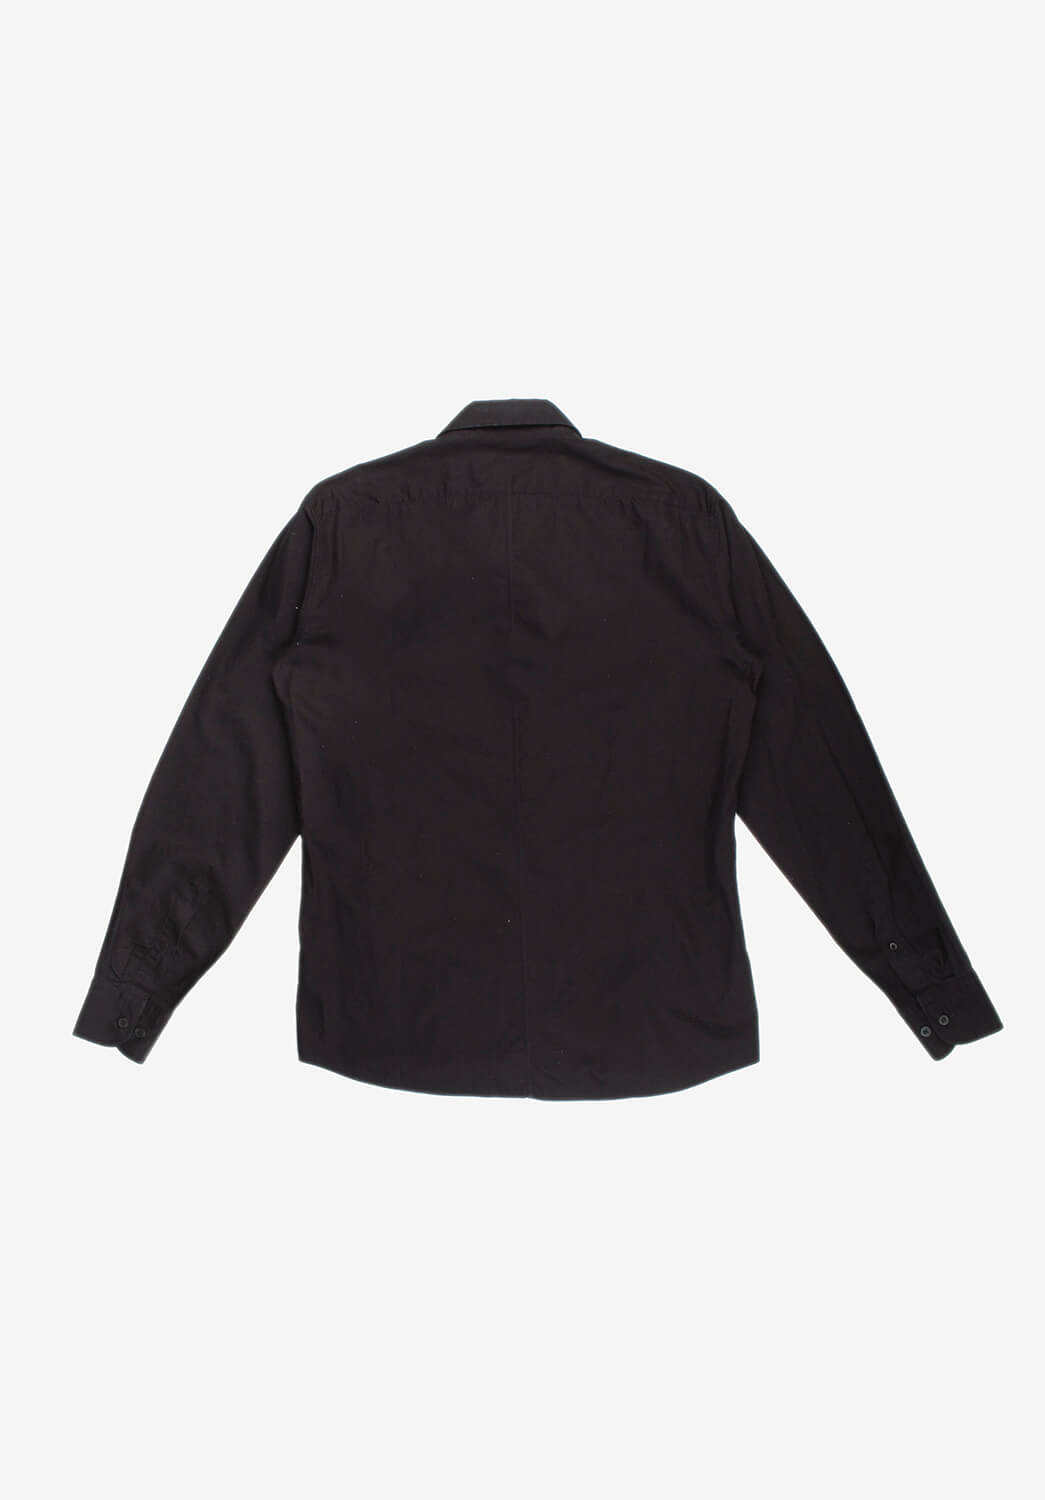 Original Dries Van Noten Buttons Floral Black Men Shirt in size 46IT (S)